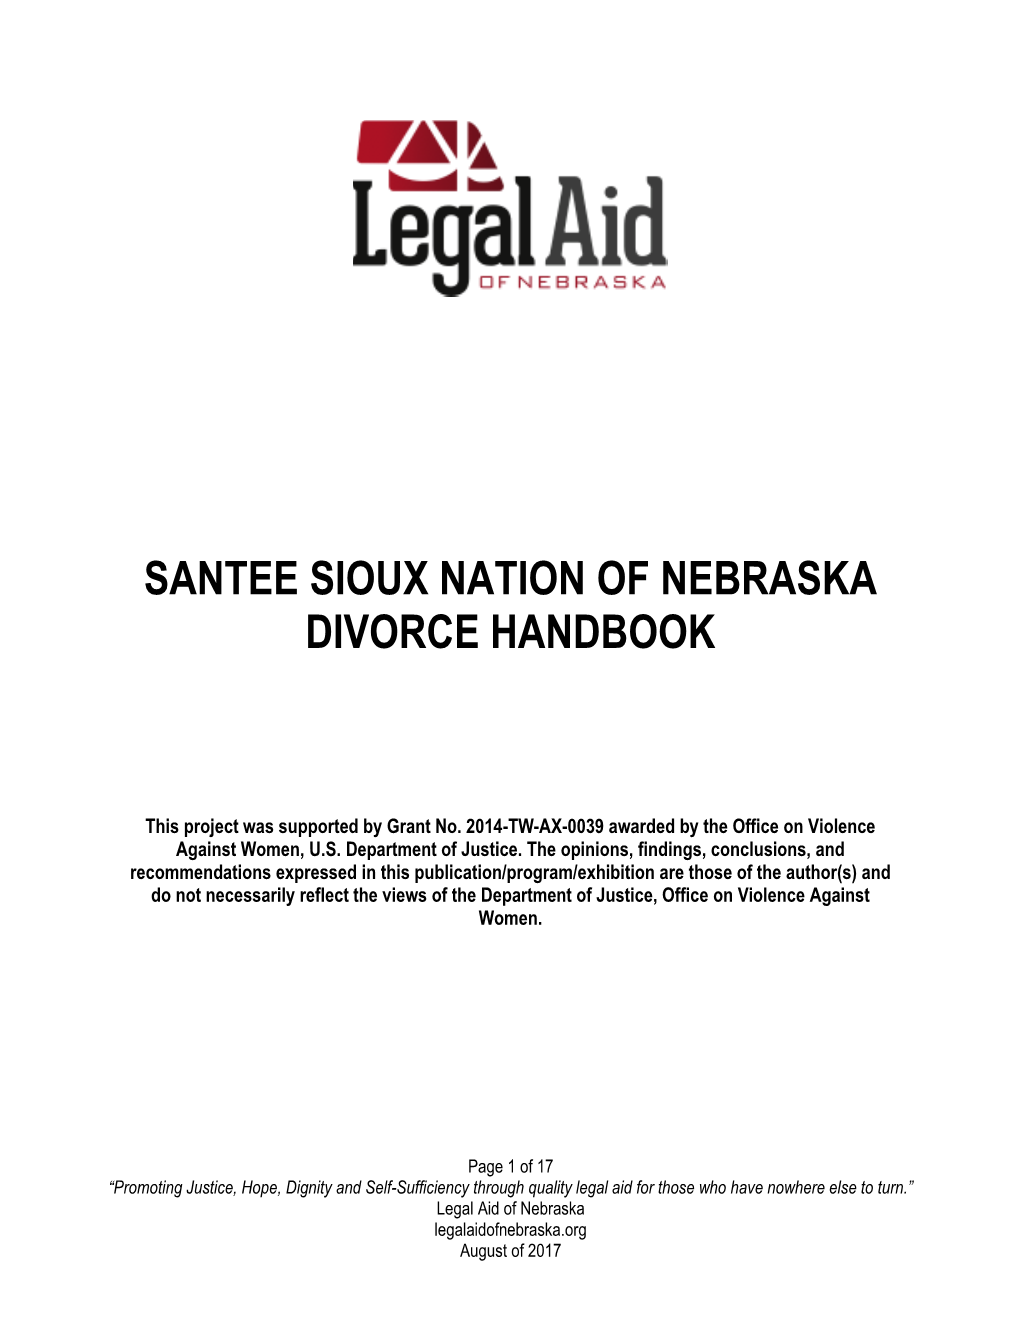 Santee Sioux Nation of Nebraska Divorce Handbook